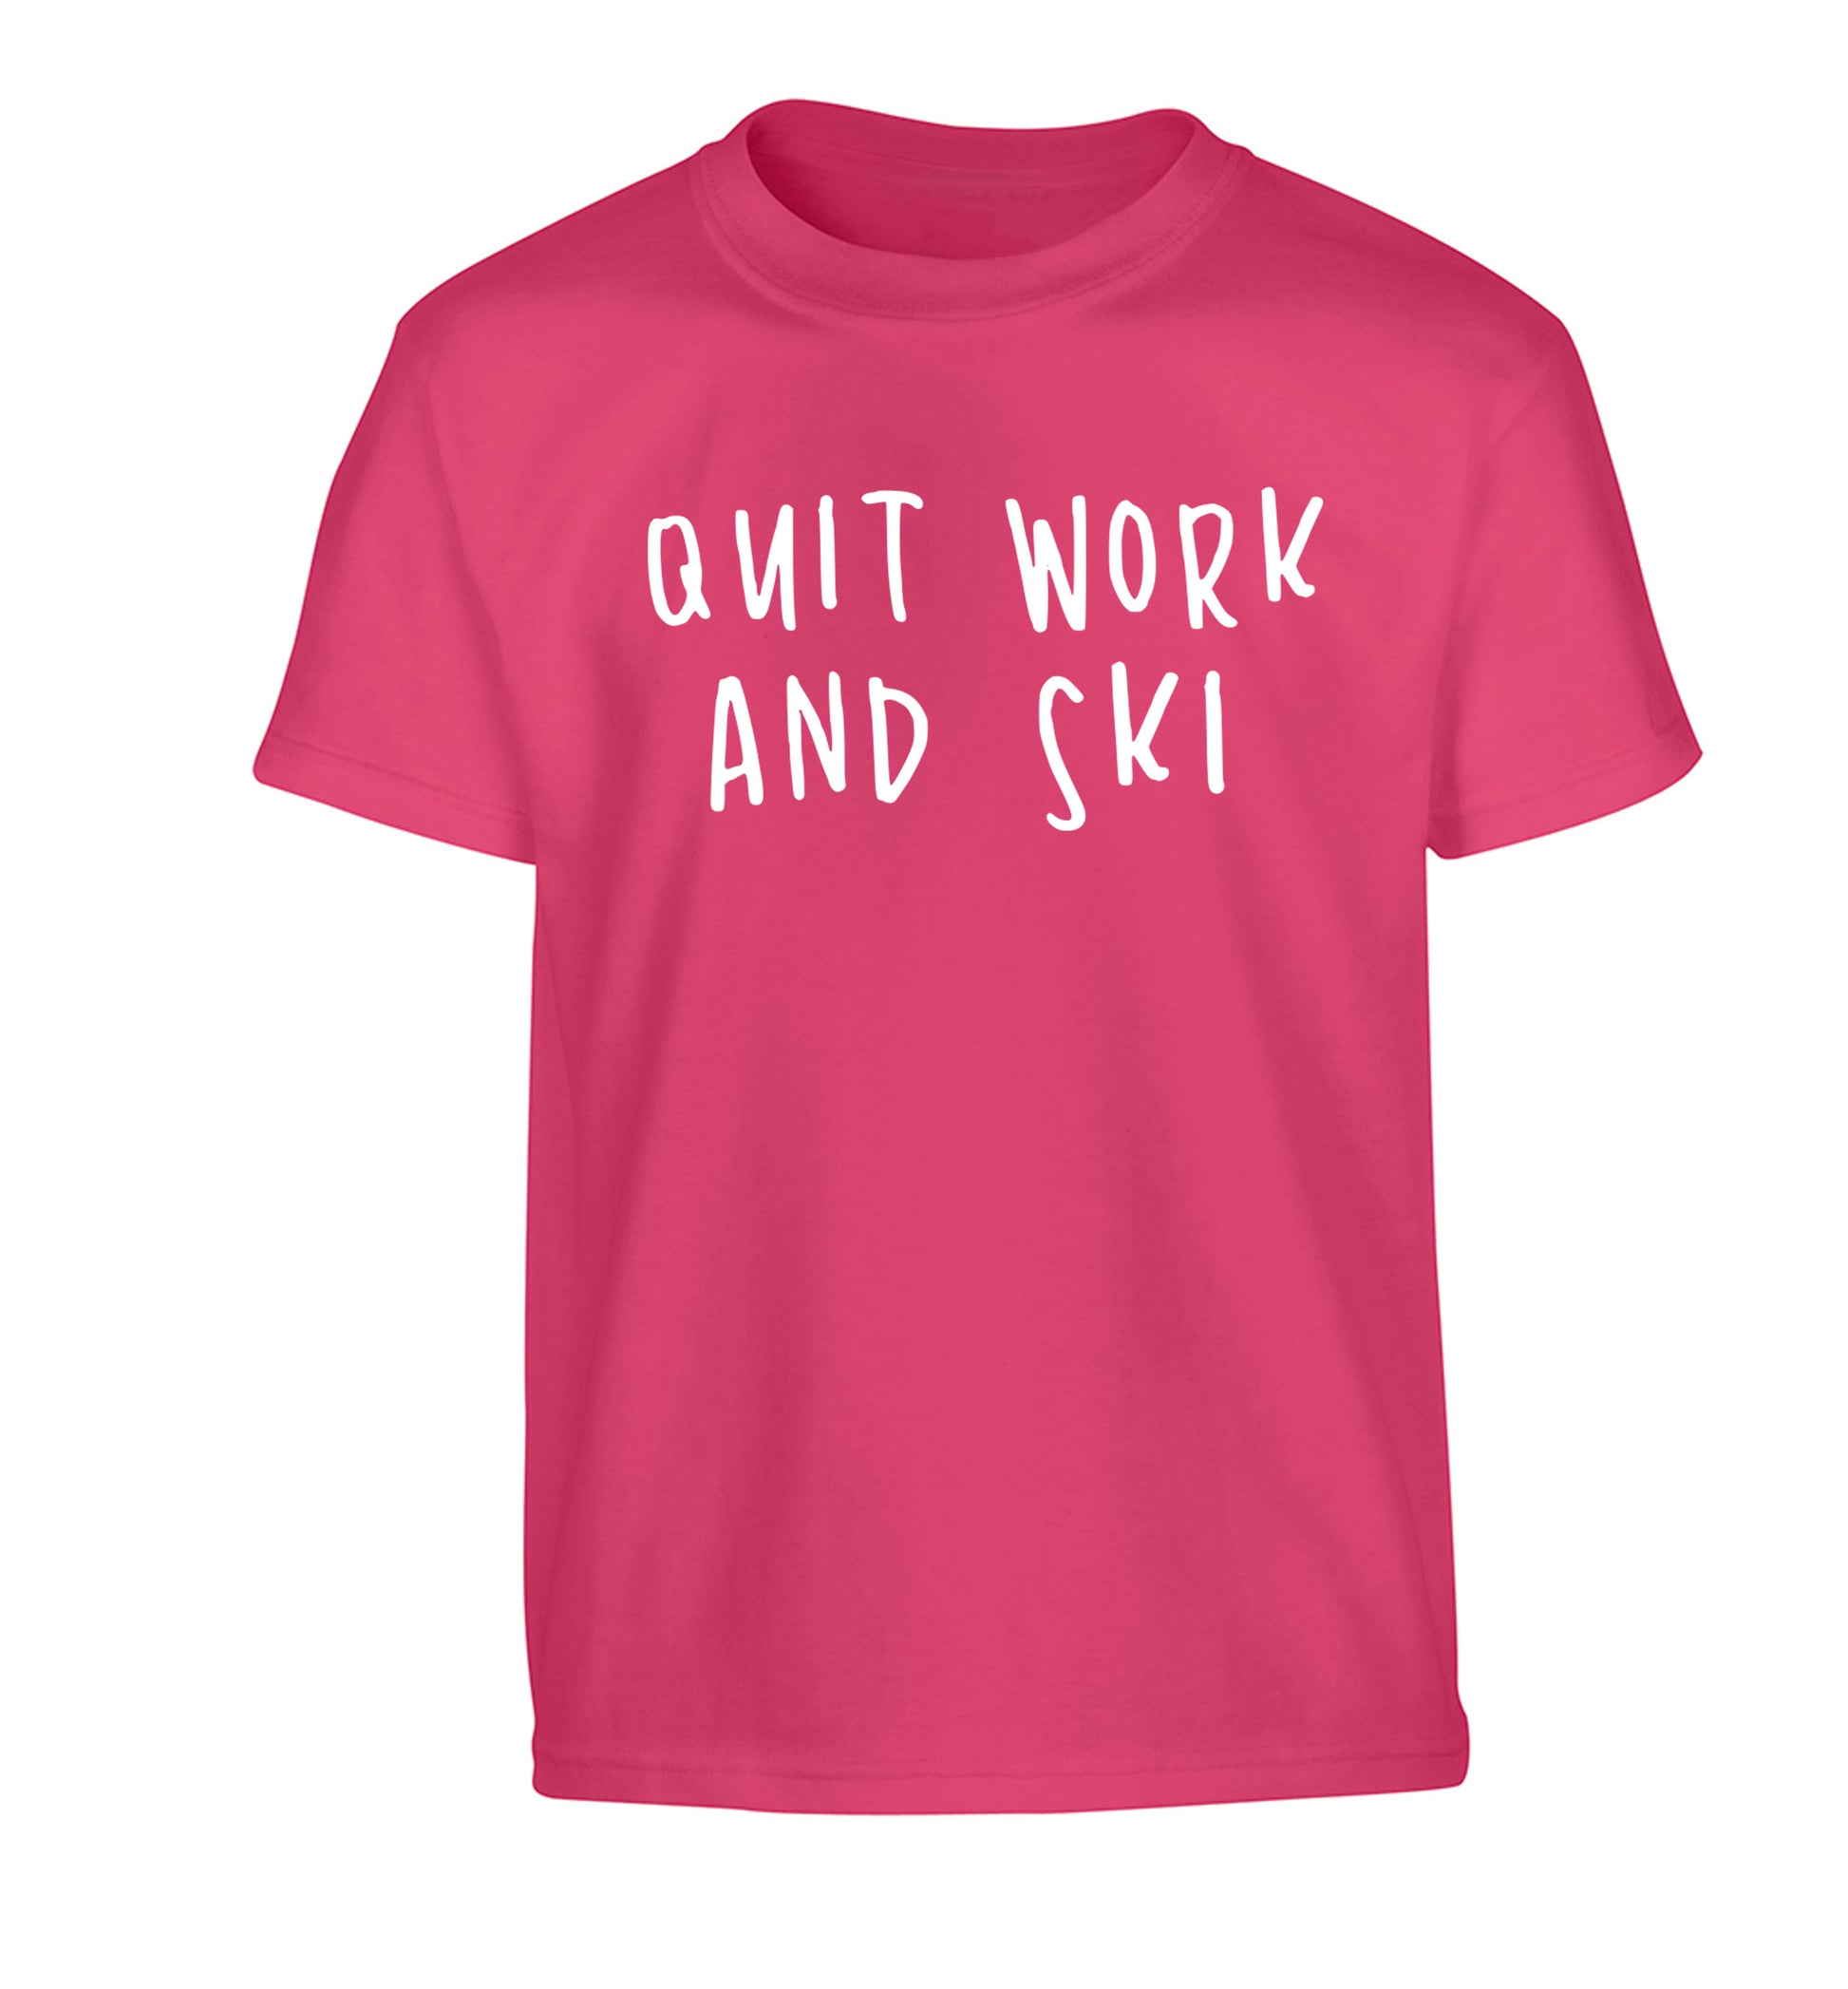 Quit work and ski Children's pink Tshirt 12-14 Years